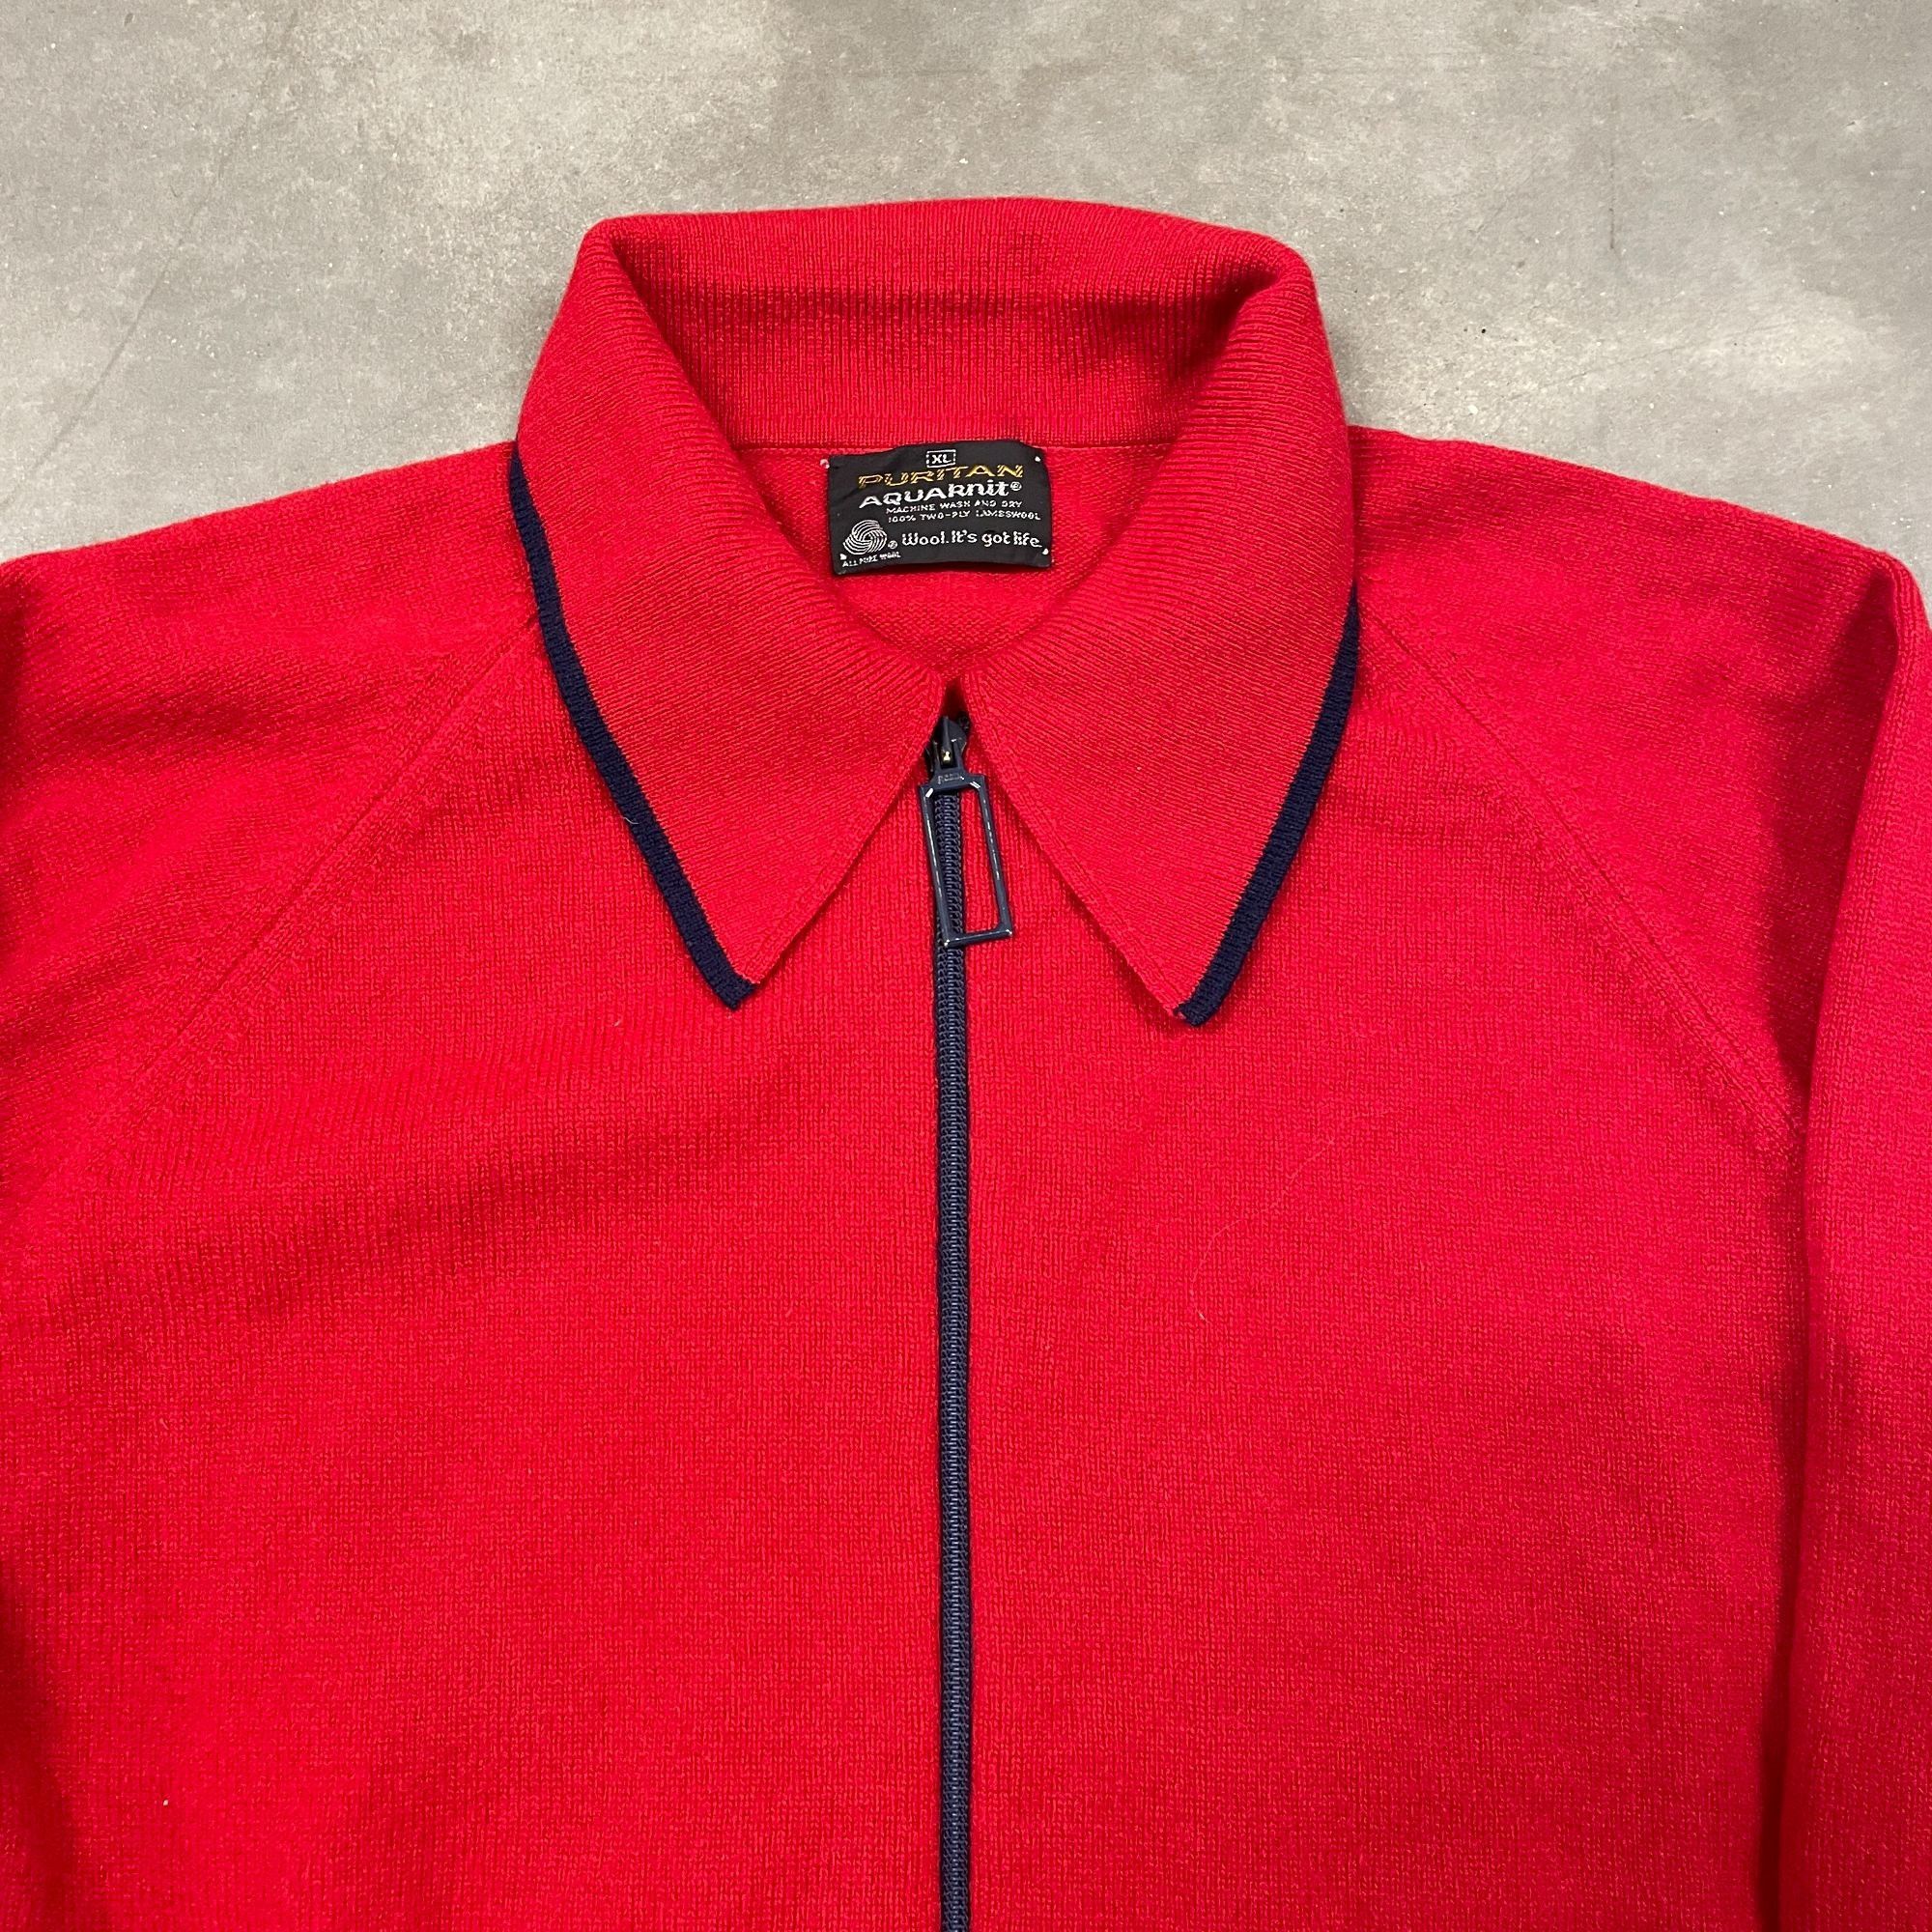 Vintage 60s VTG Red Wool Puritan Aquaknit Wool Zip Up Sweater XL Red Size US XL / EU 56 / 4 - 3 Thumbnail